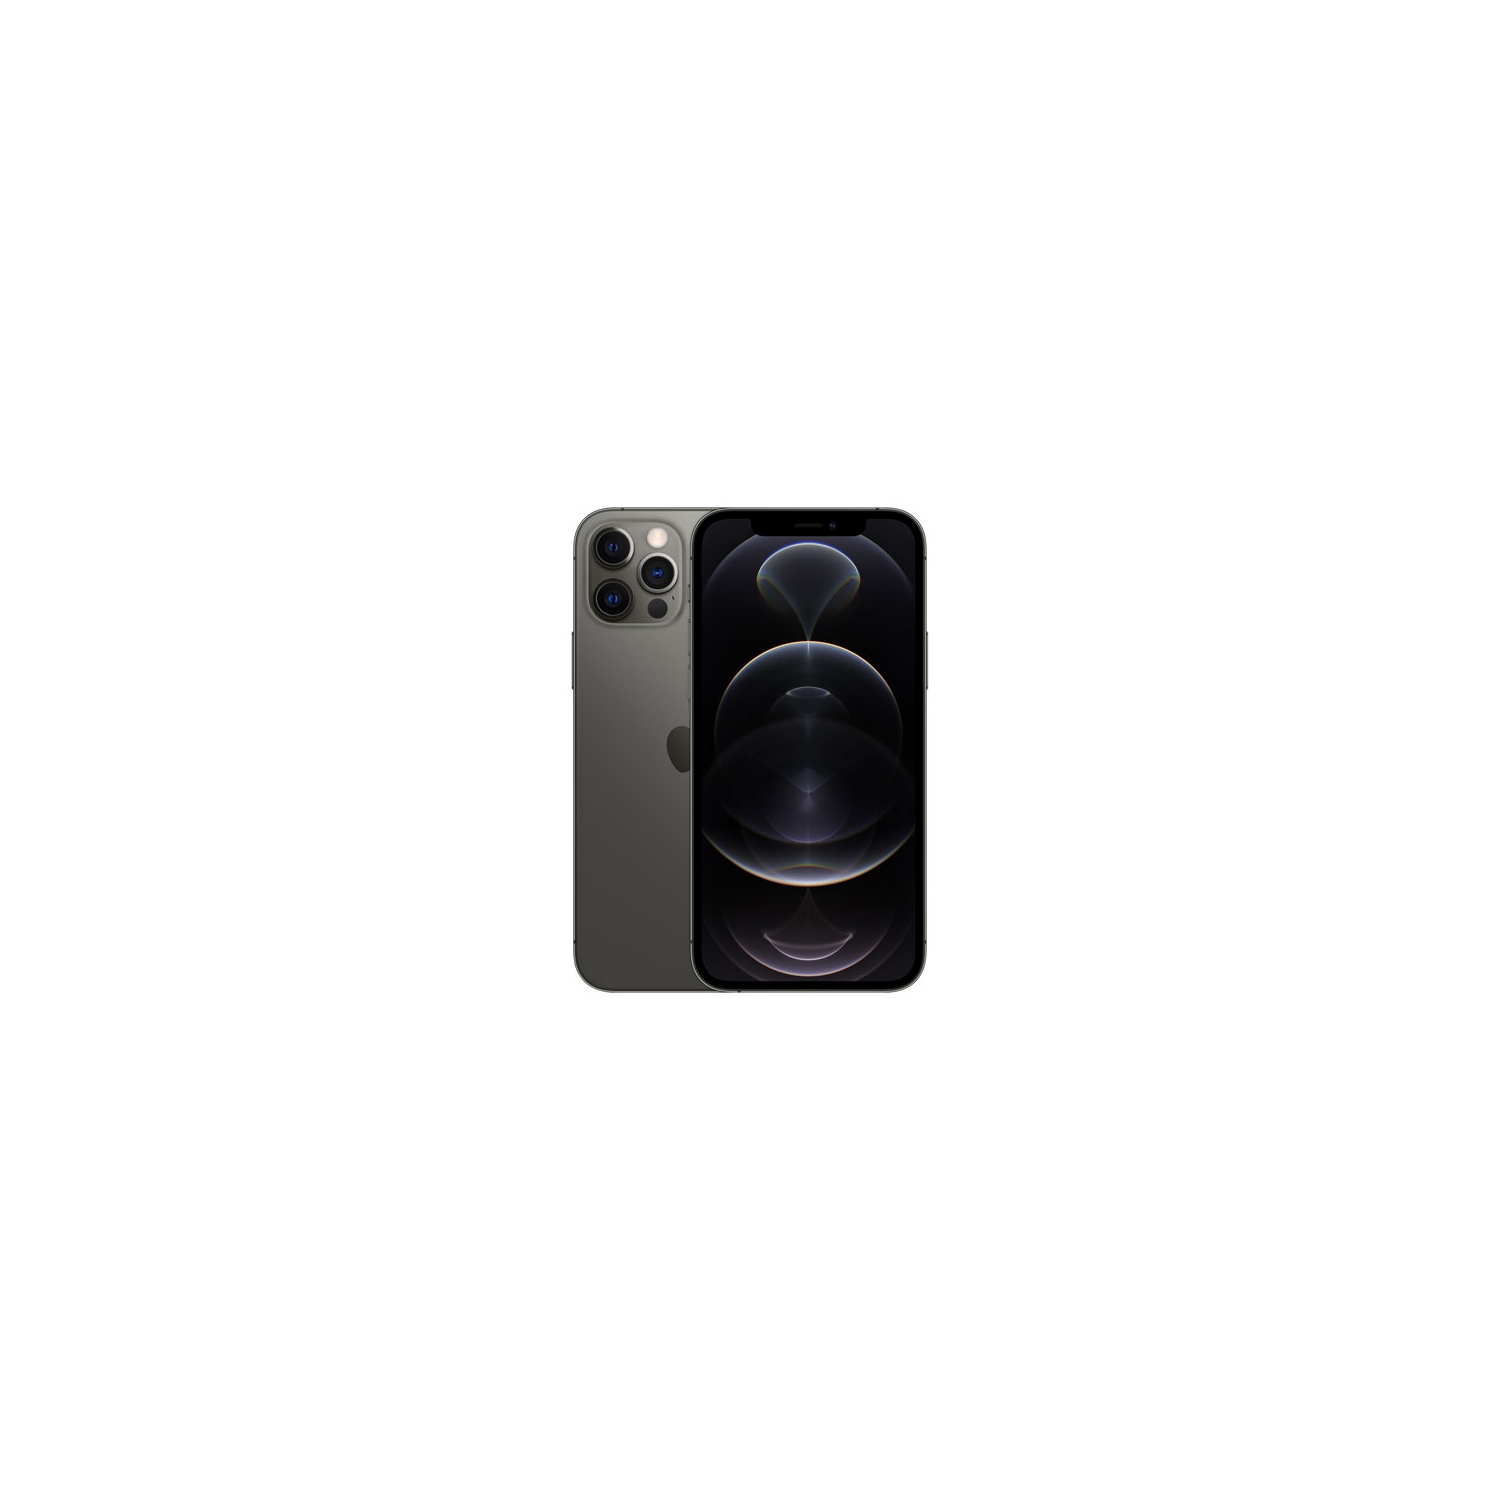 Apple iPhone 12 Pro 256GB Smartphone - Graphite - Unlocked - Open Box